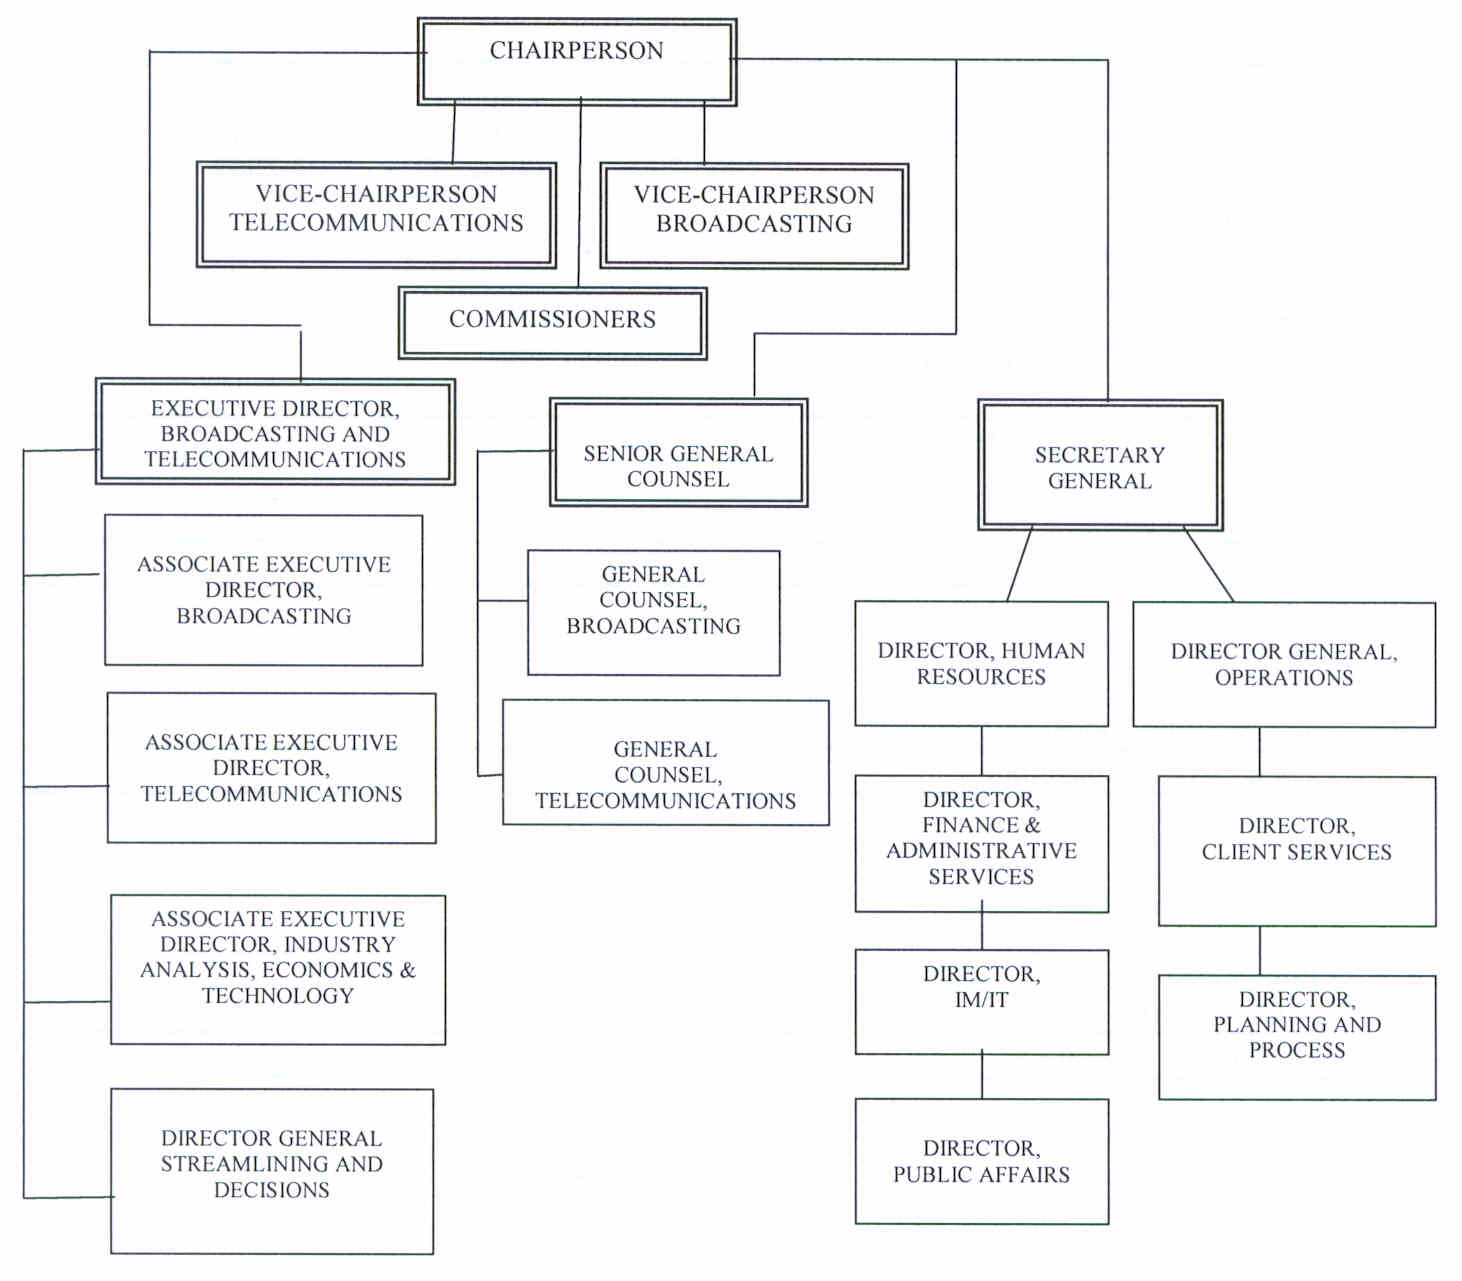 CRTC Organization Chart